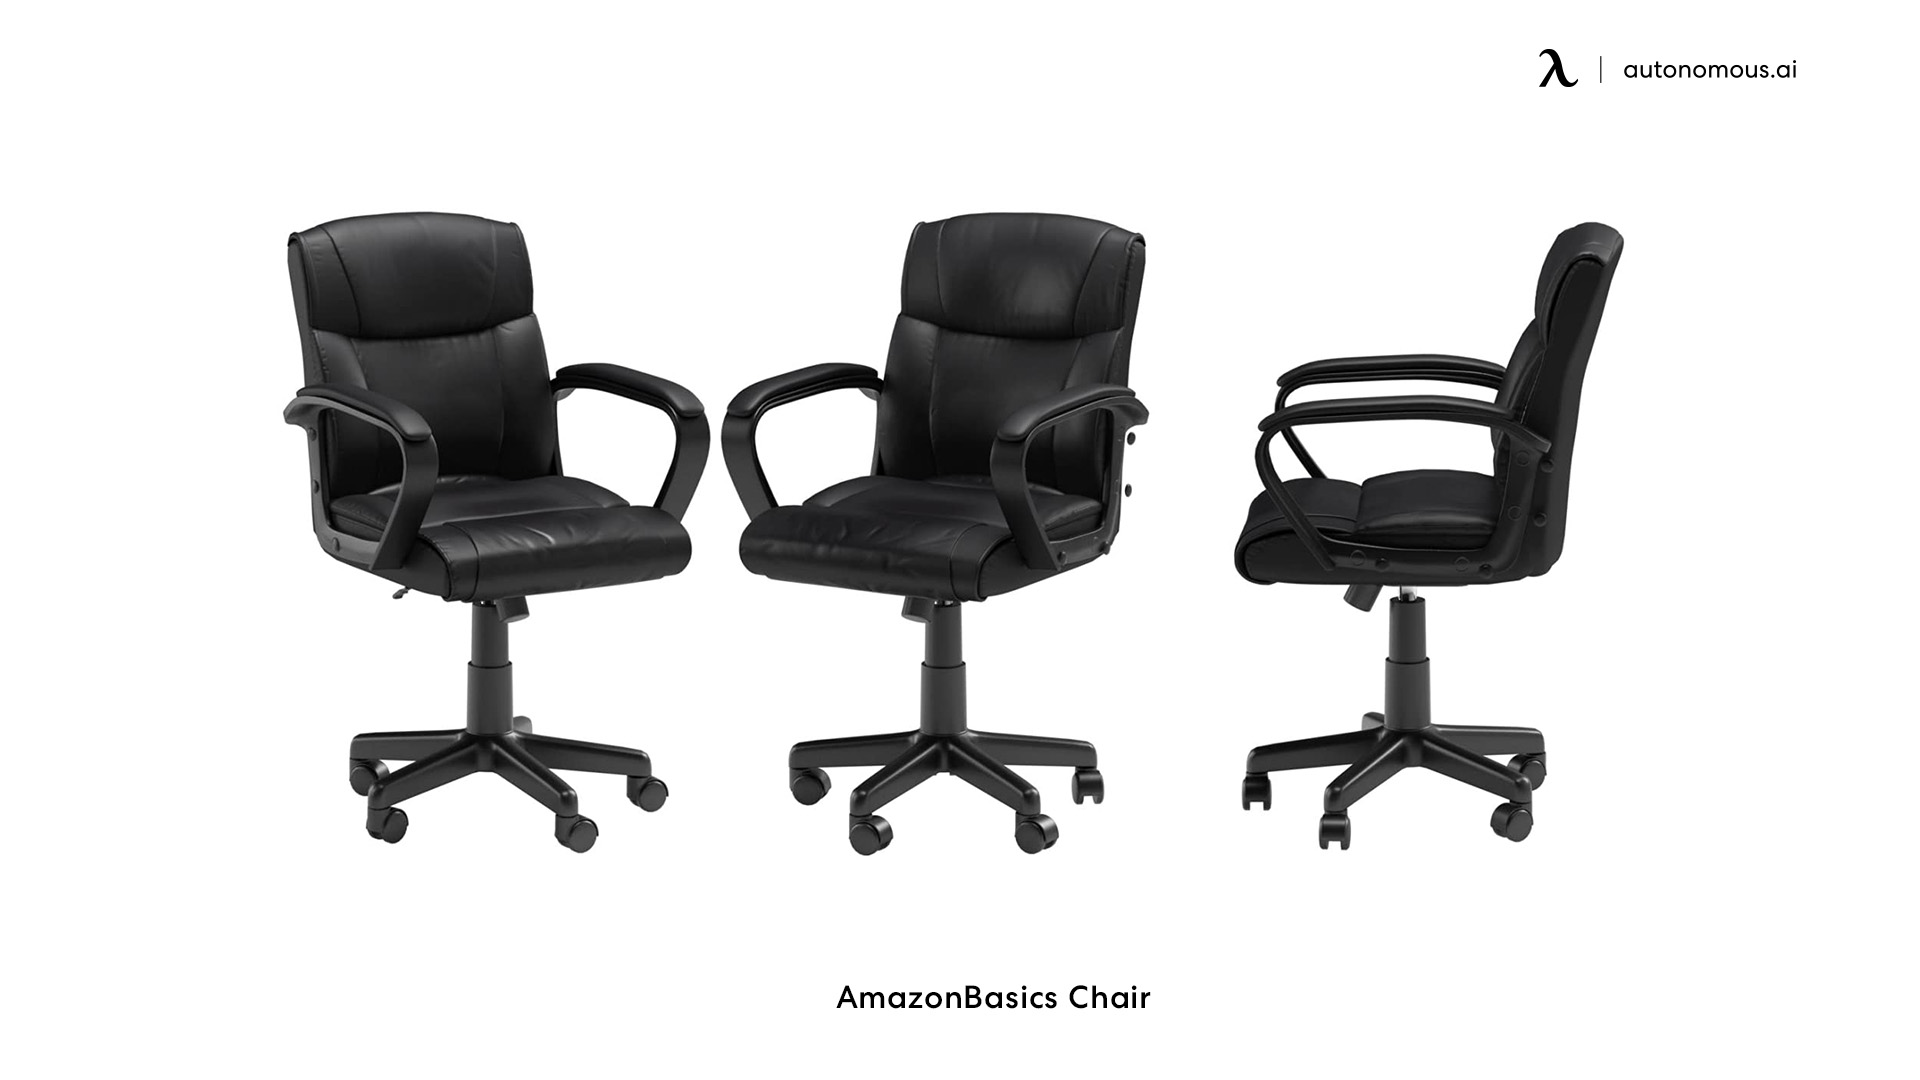 The Amazon-Basics fabric swivel office chair